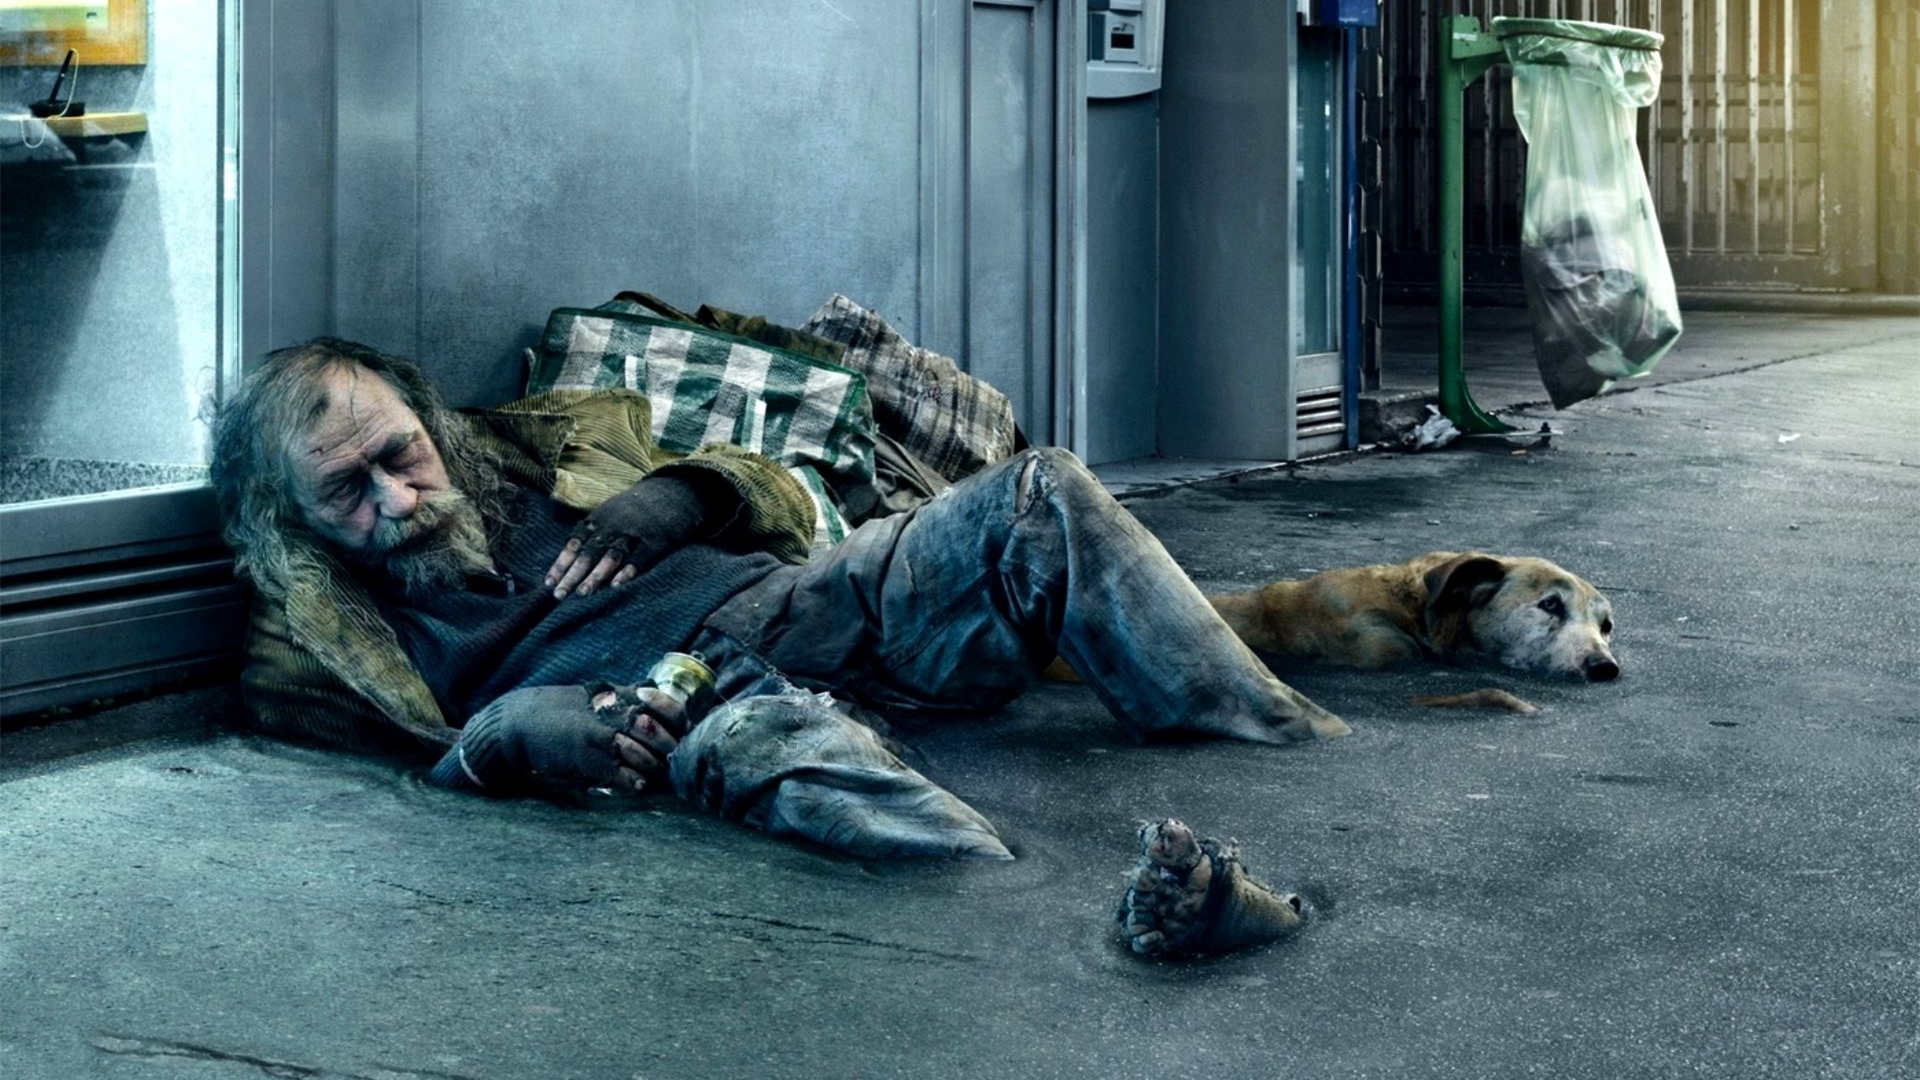 People 1920x1080 old people photo manipulation dog homeless street sinking sad depressing urban